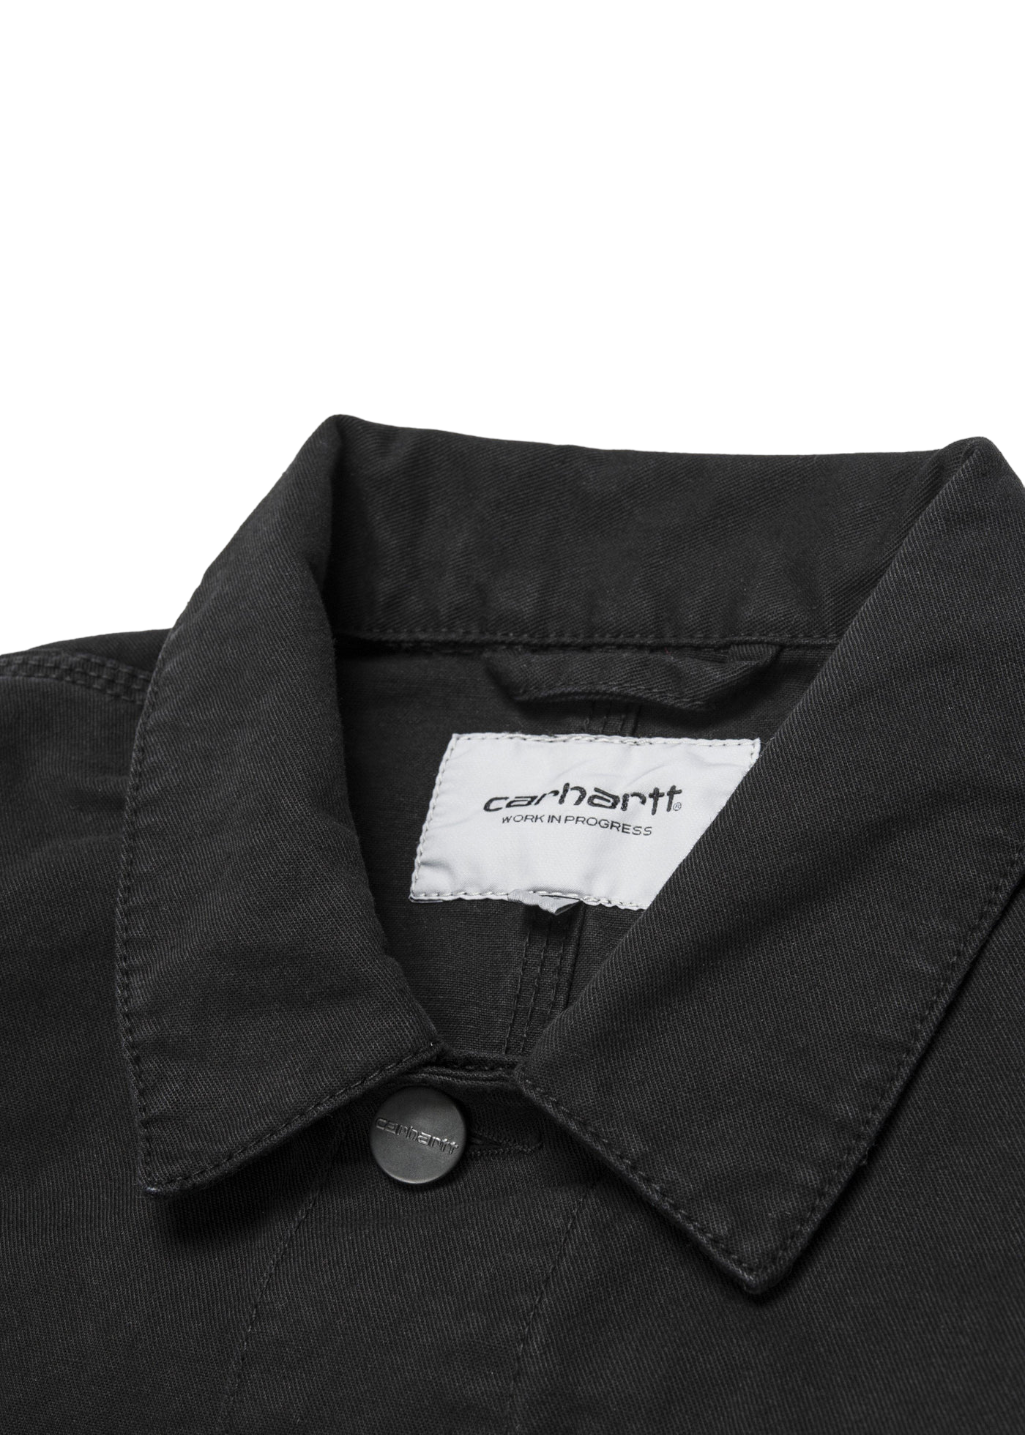 Carhartt WIP - Michigan Coat (Chore Coat) - Black - Hardpressed Print Studio Inc.